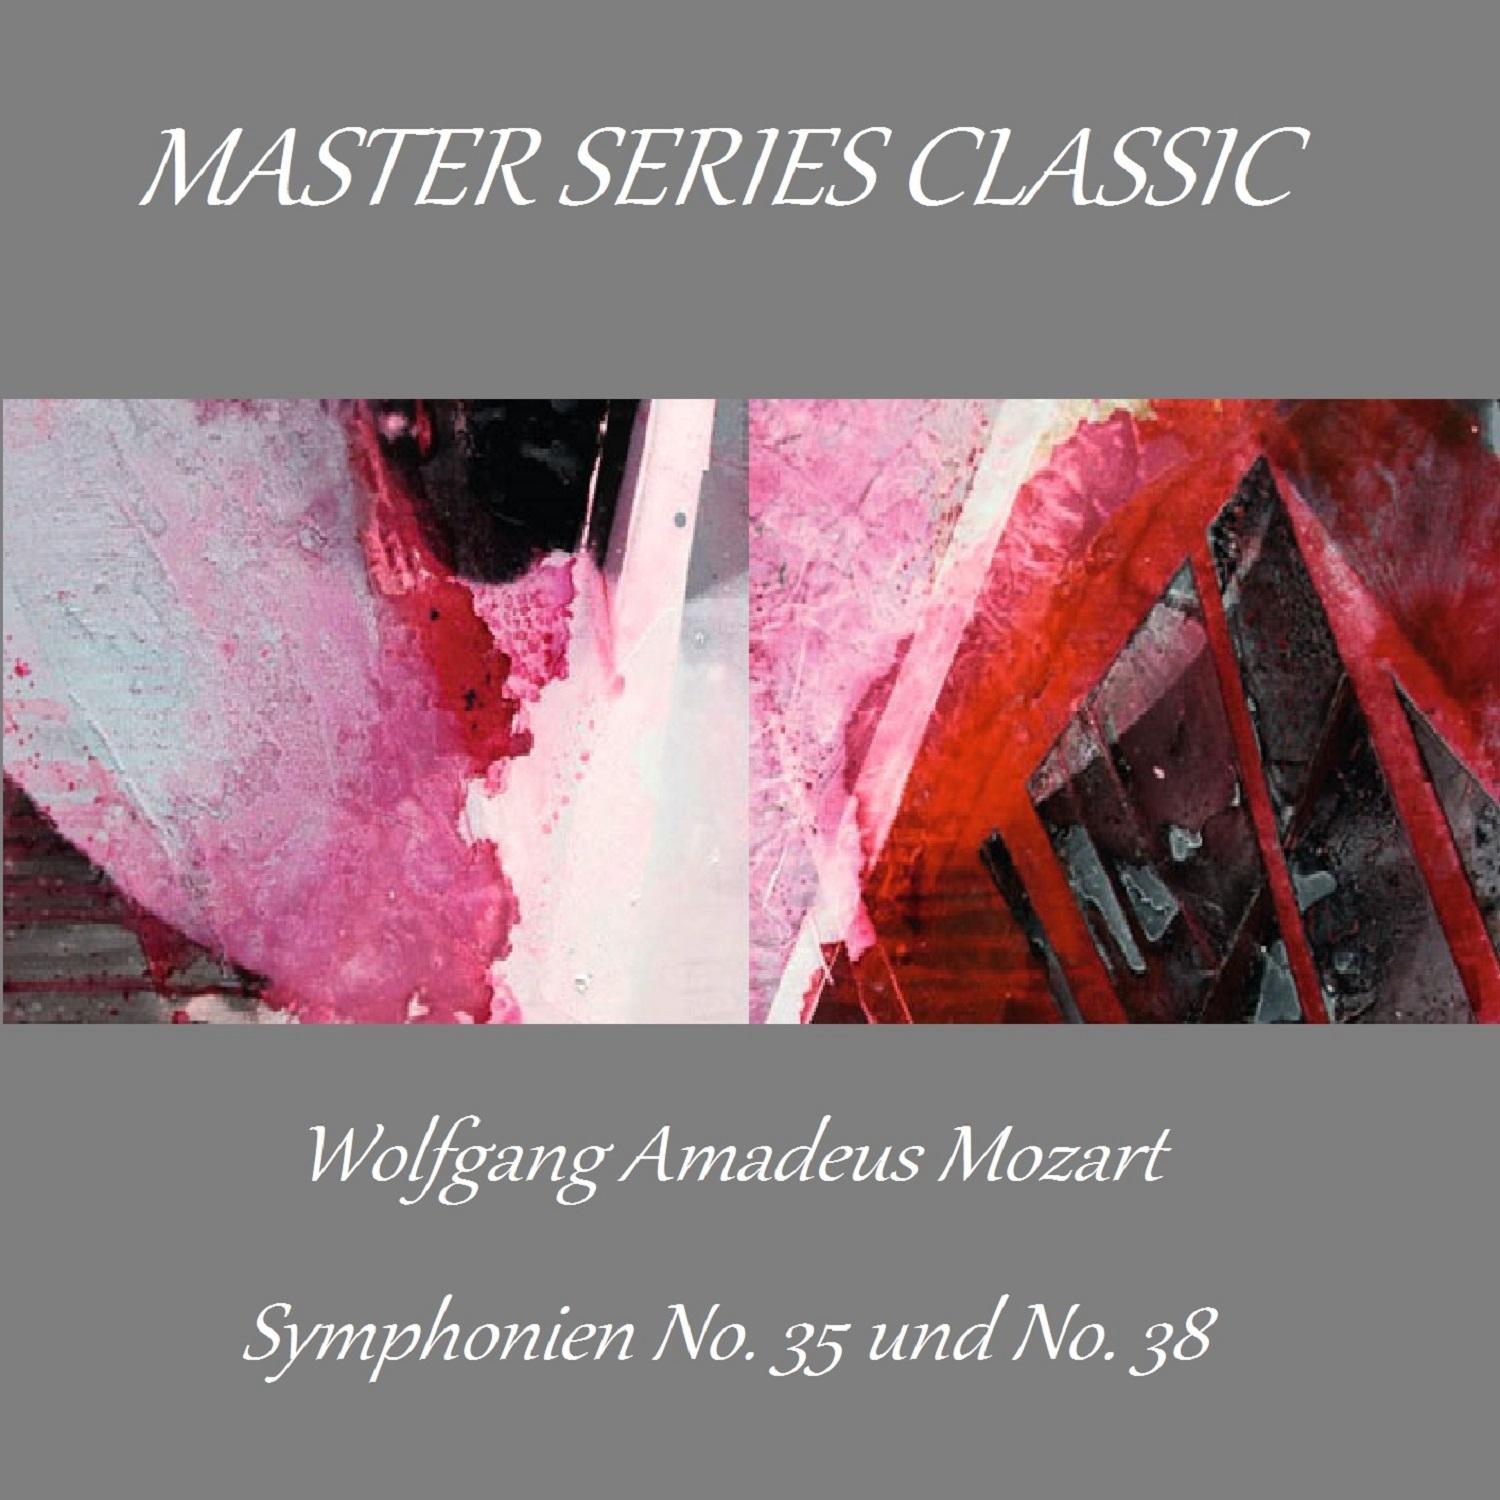 Symphony No. 38 in D Major, K. 504: I. Adagio - Allegro